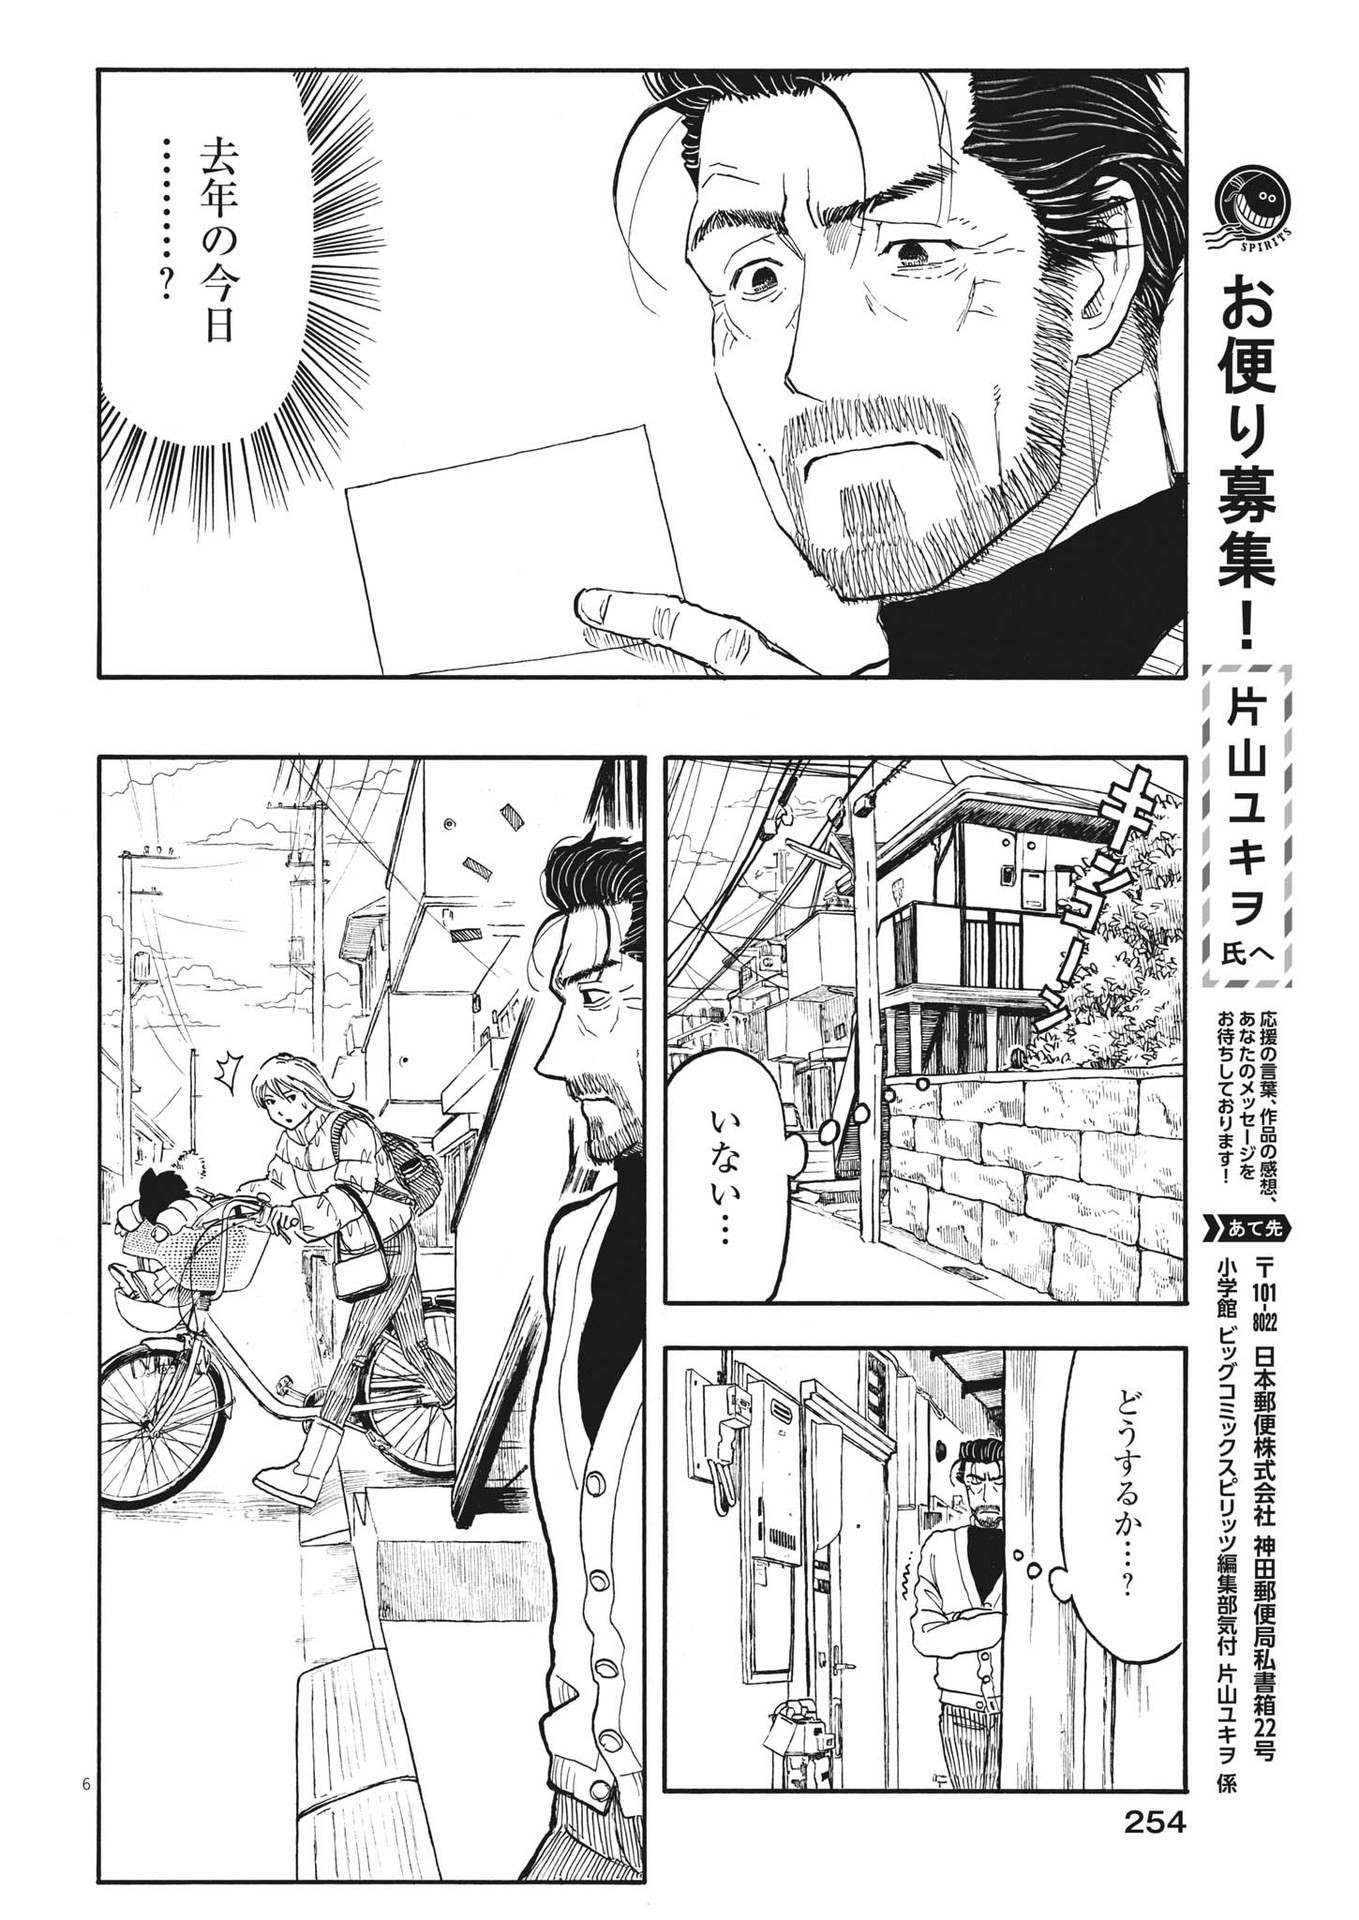 Komegura Fuufu no Recipe-chou - Chapter 33 - Page 6